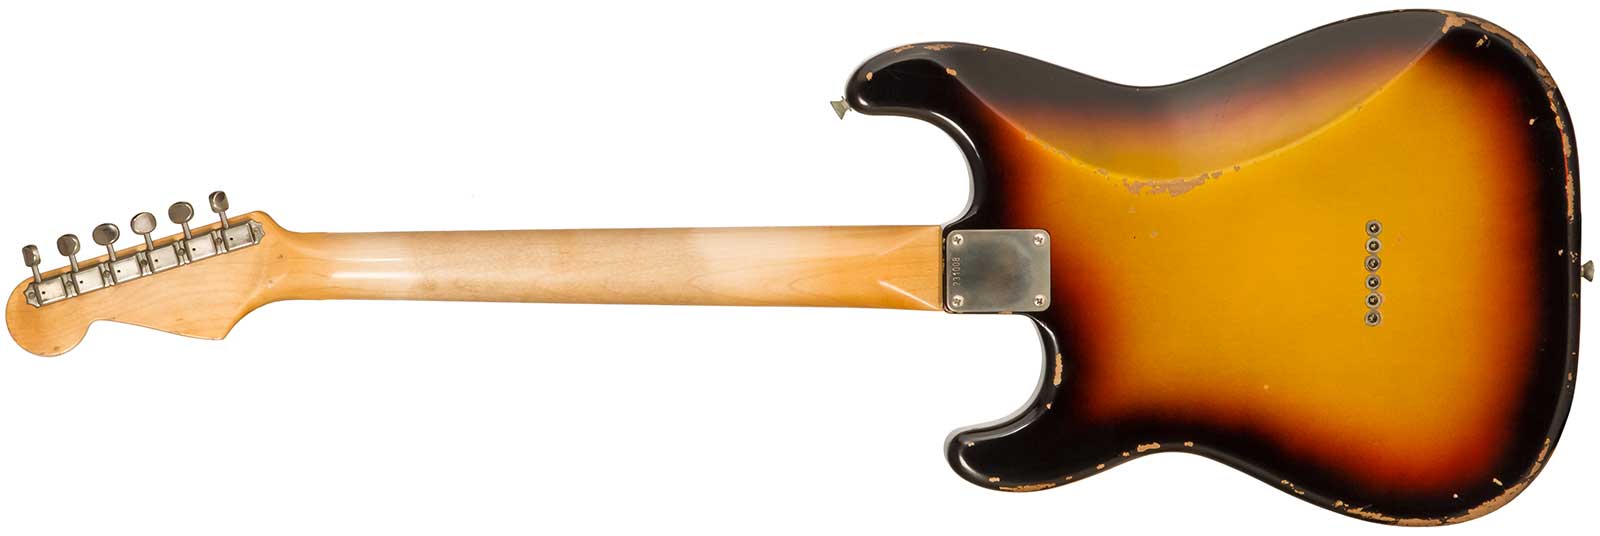 Rebelrelic S-series 1961 Hardtail 3s Ht Rw #231008 - 3-tone Sunburst - Guitarra eléctrica con forma de str. - Variation 1